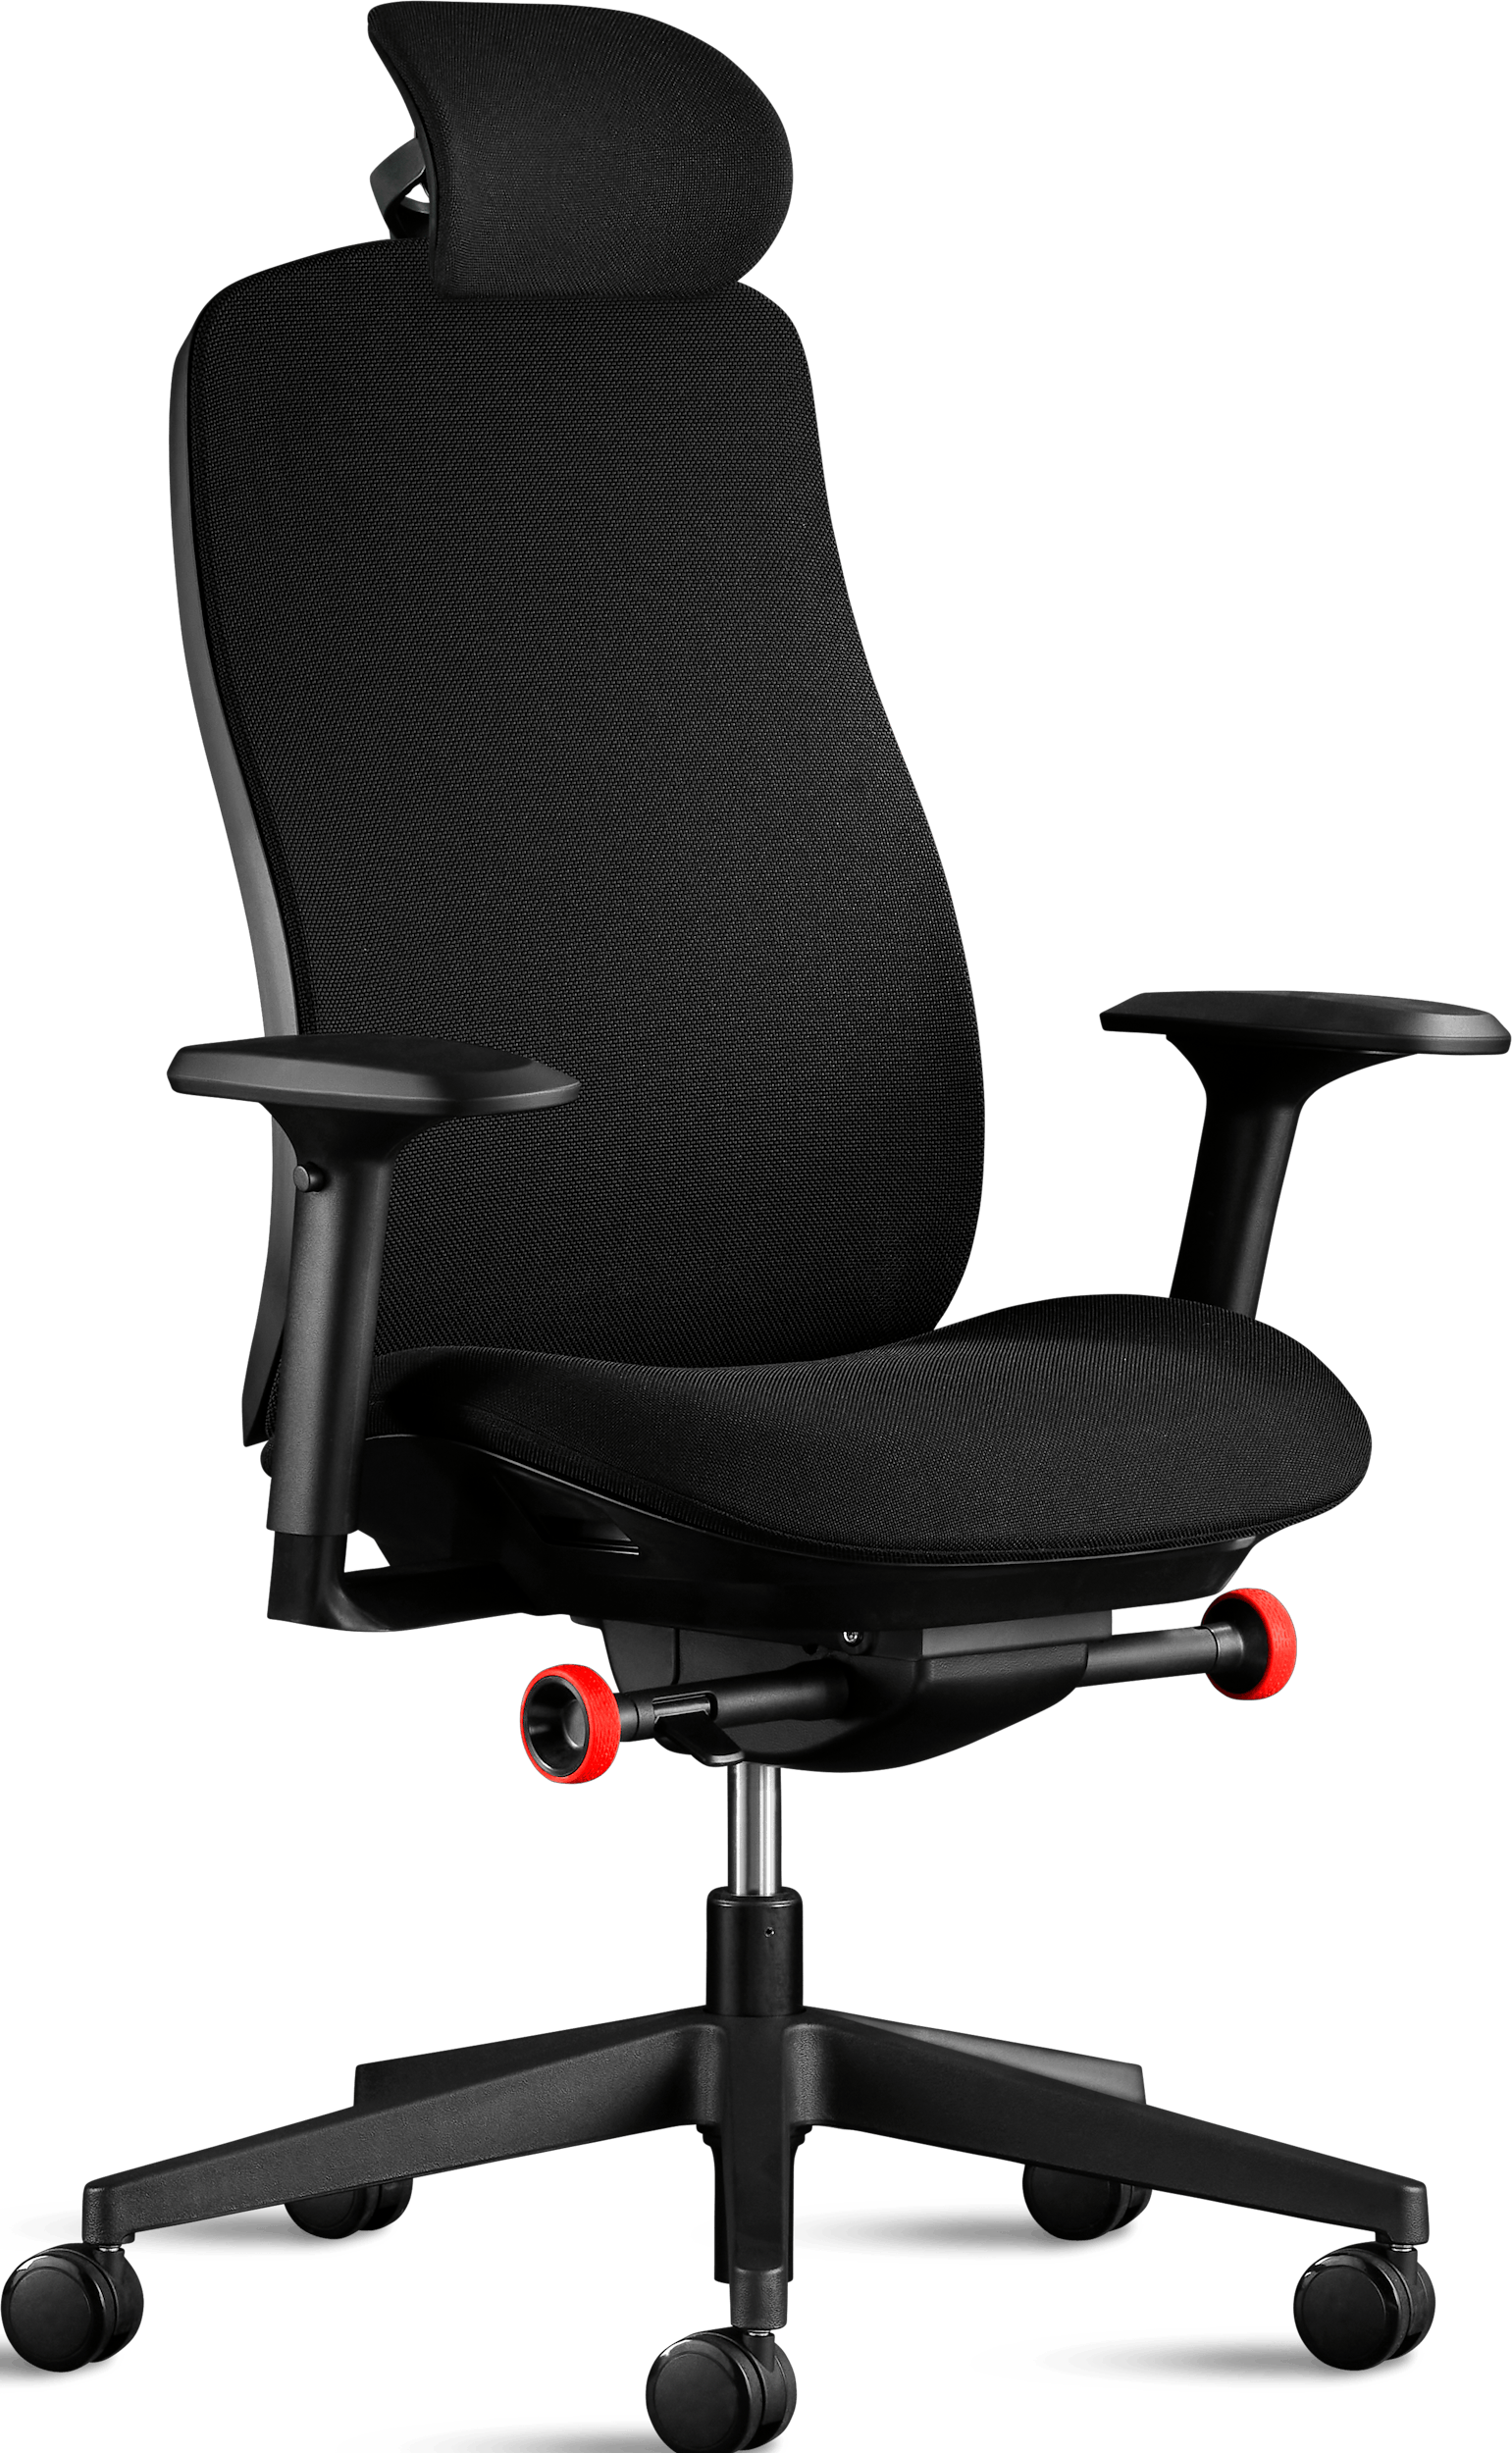 Fully Adjustable Chair w/Adjustable Sliding Seat Depth